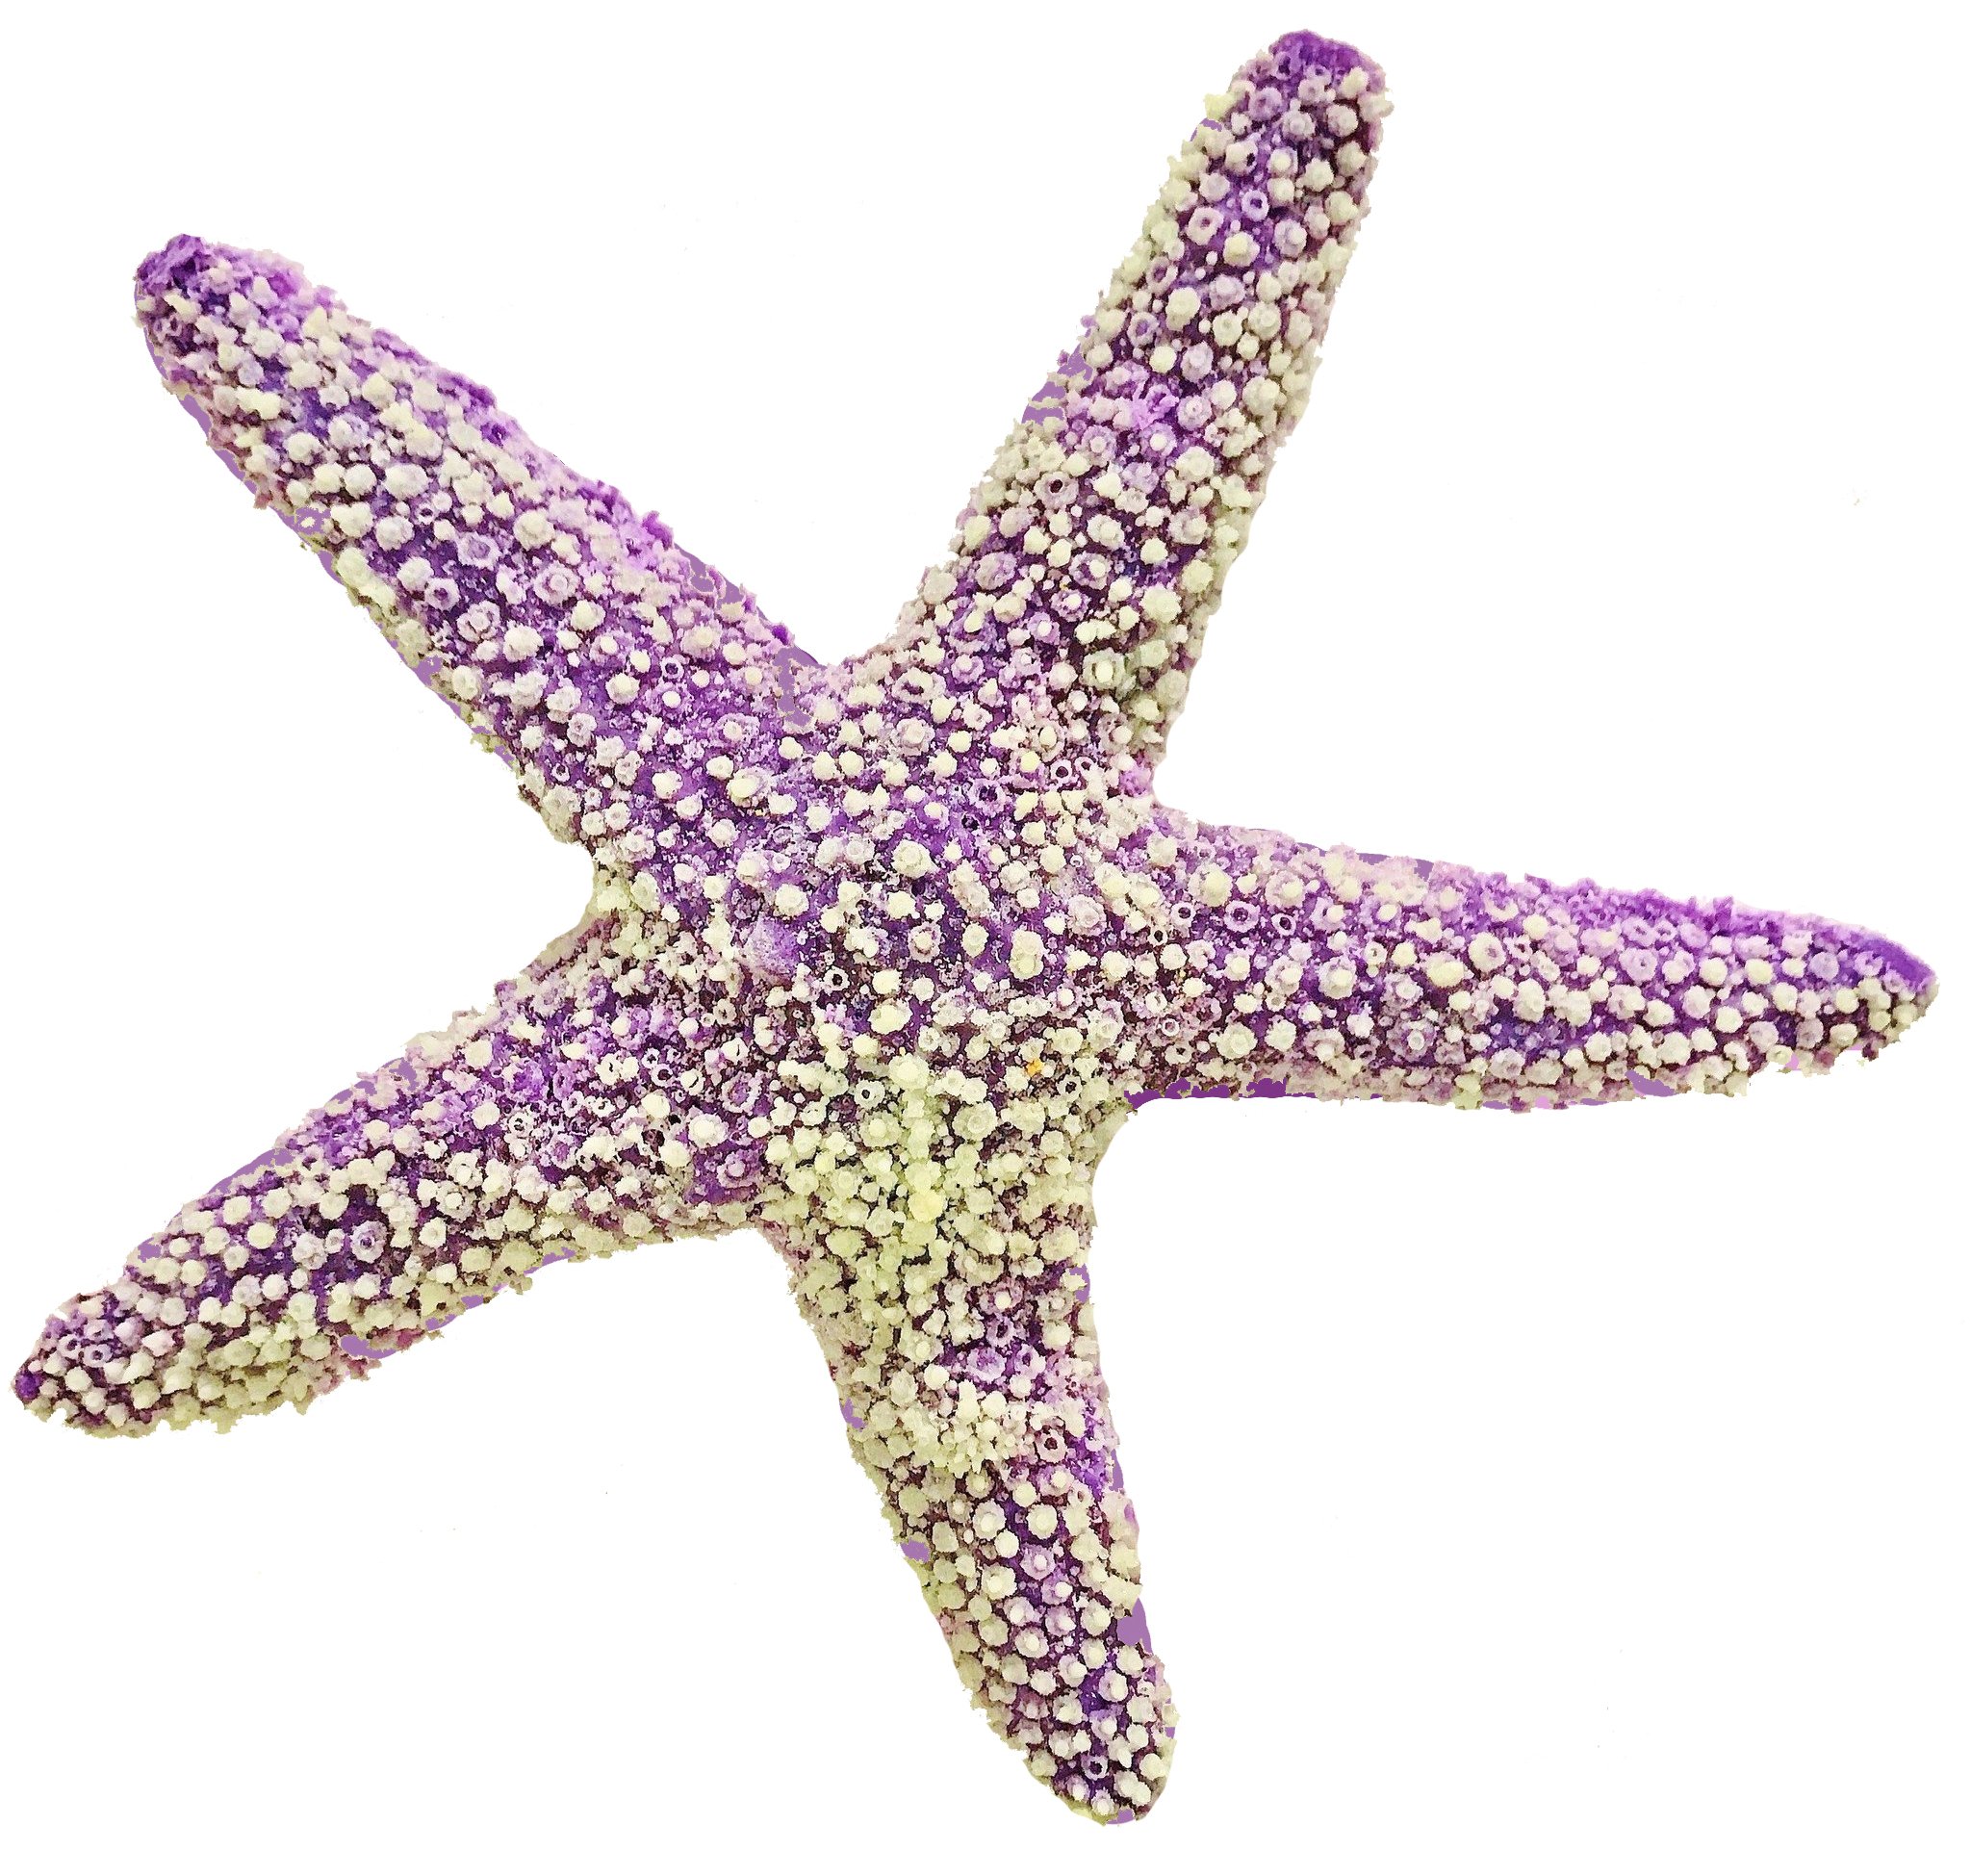 Purple Starfish - pisaster ochraceus #15101 - RocknReefs Inc. Starfish. 